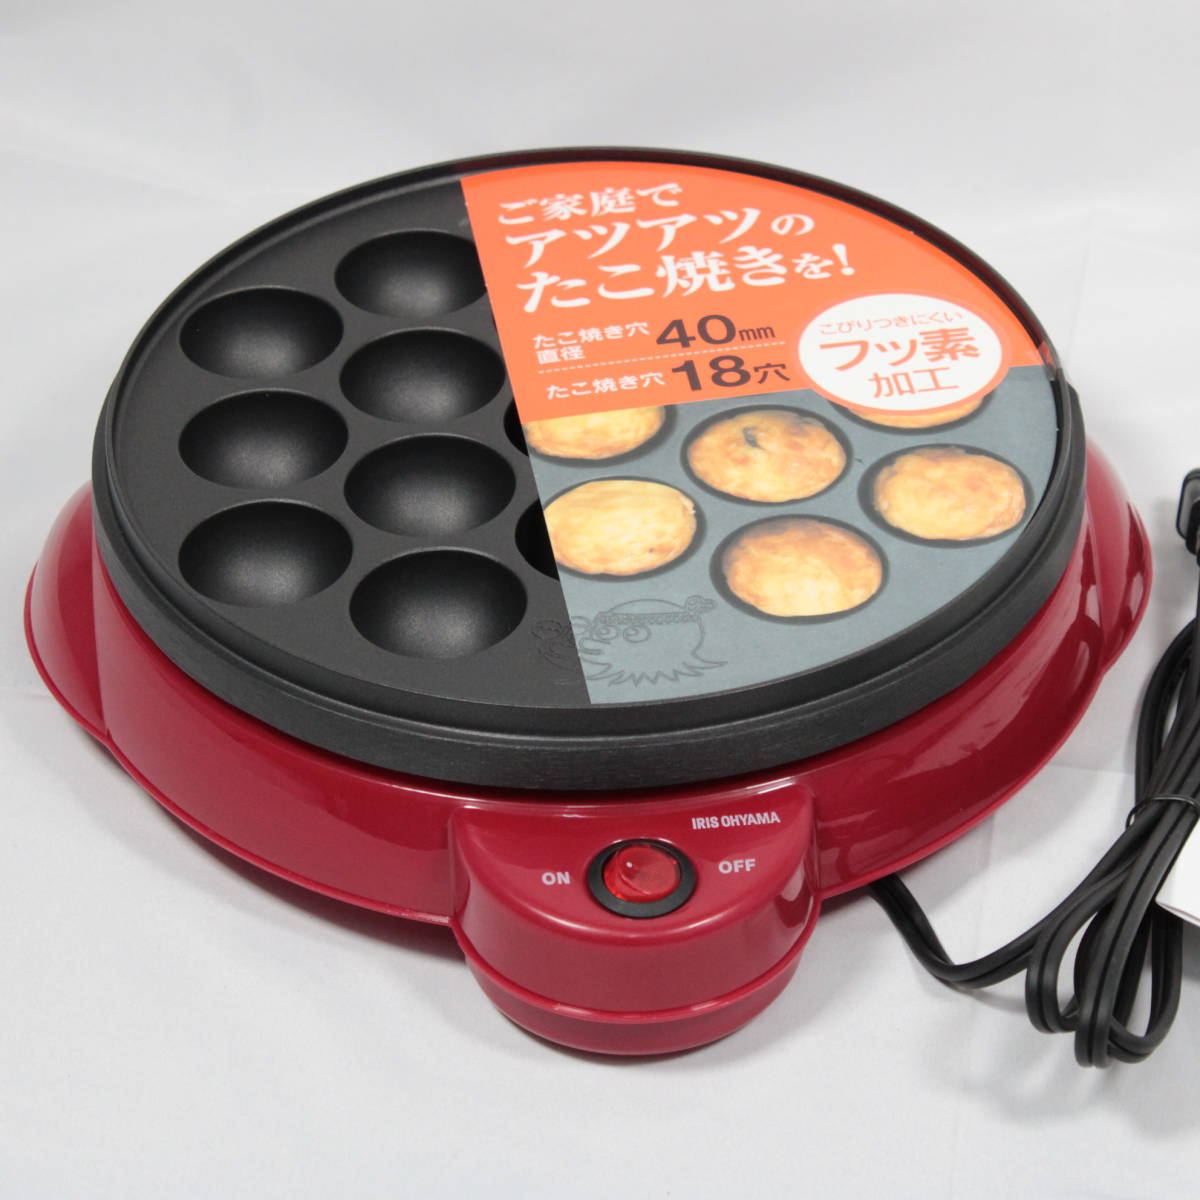 a07183 Iris o-yama сковорода для takoyaki красный ITY-18A-R[ outlet ]